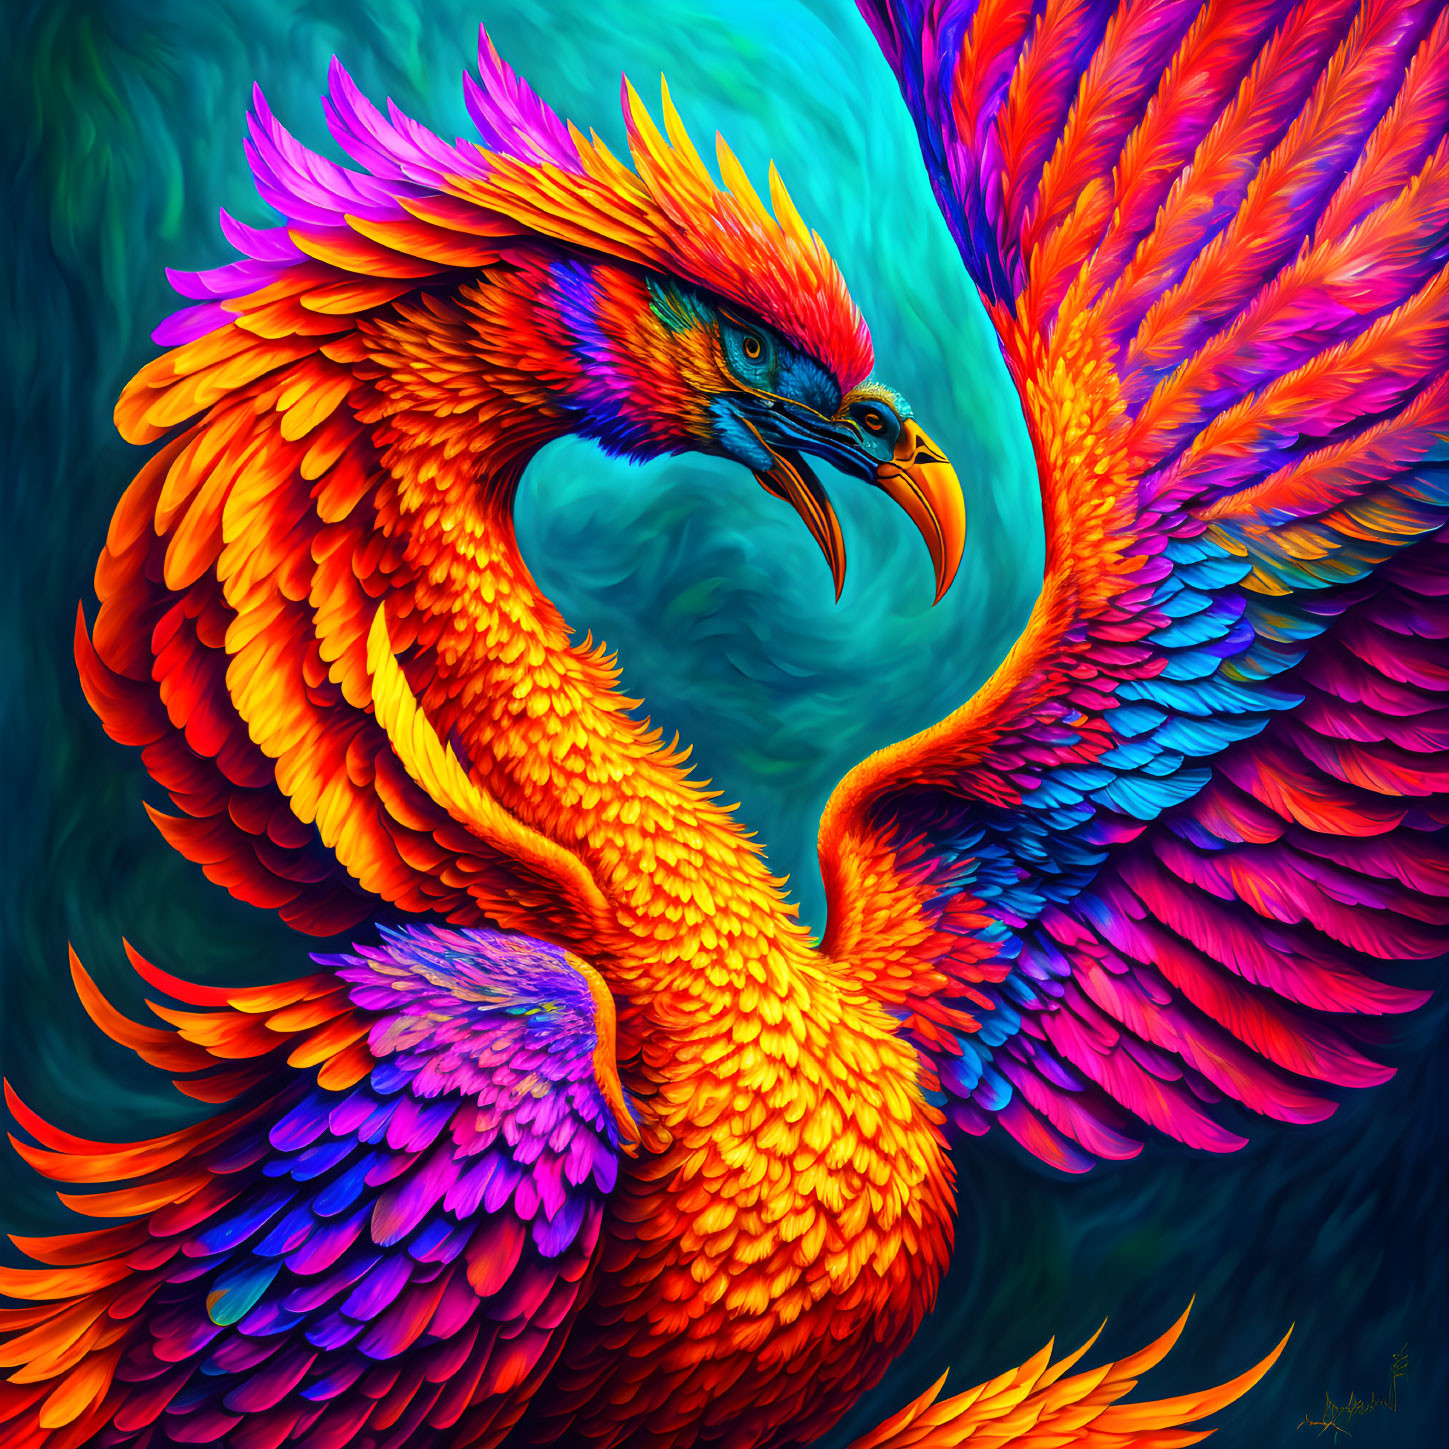 Mythical phoenix digital art with vibrant orange, blue, and violet plumage